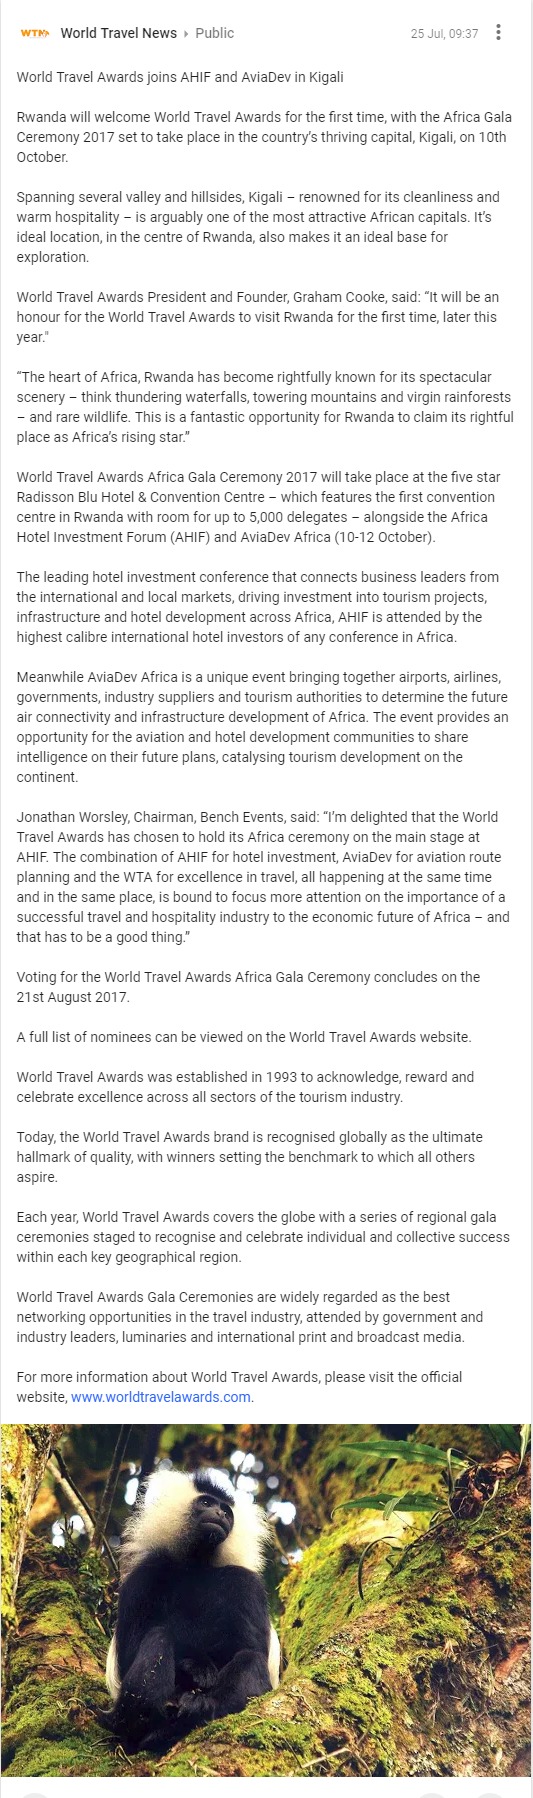 World Travel Awards joins AHIF and AviaDev in Kigali